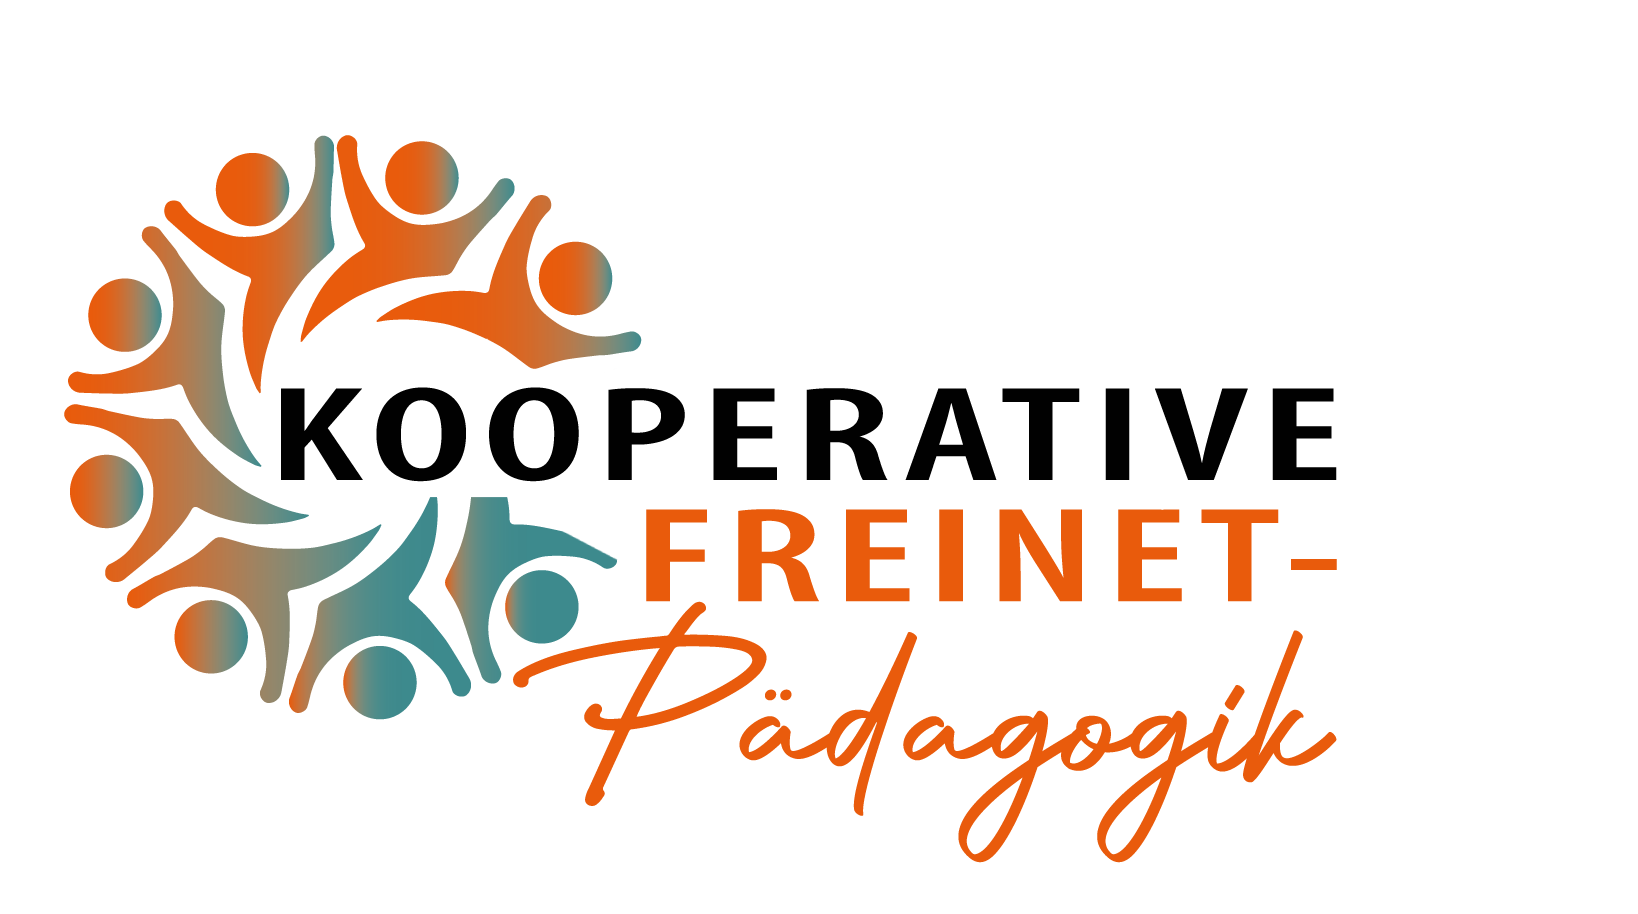 Kooperative für Freinet-Pädagogik e.V.